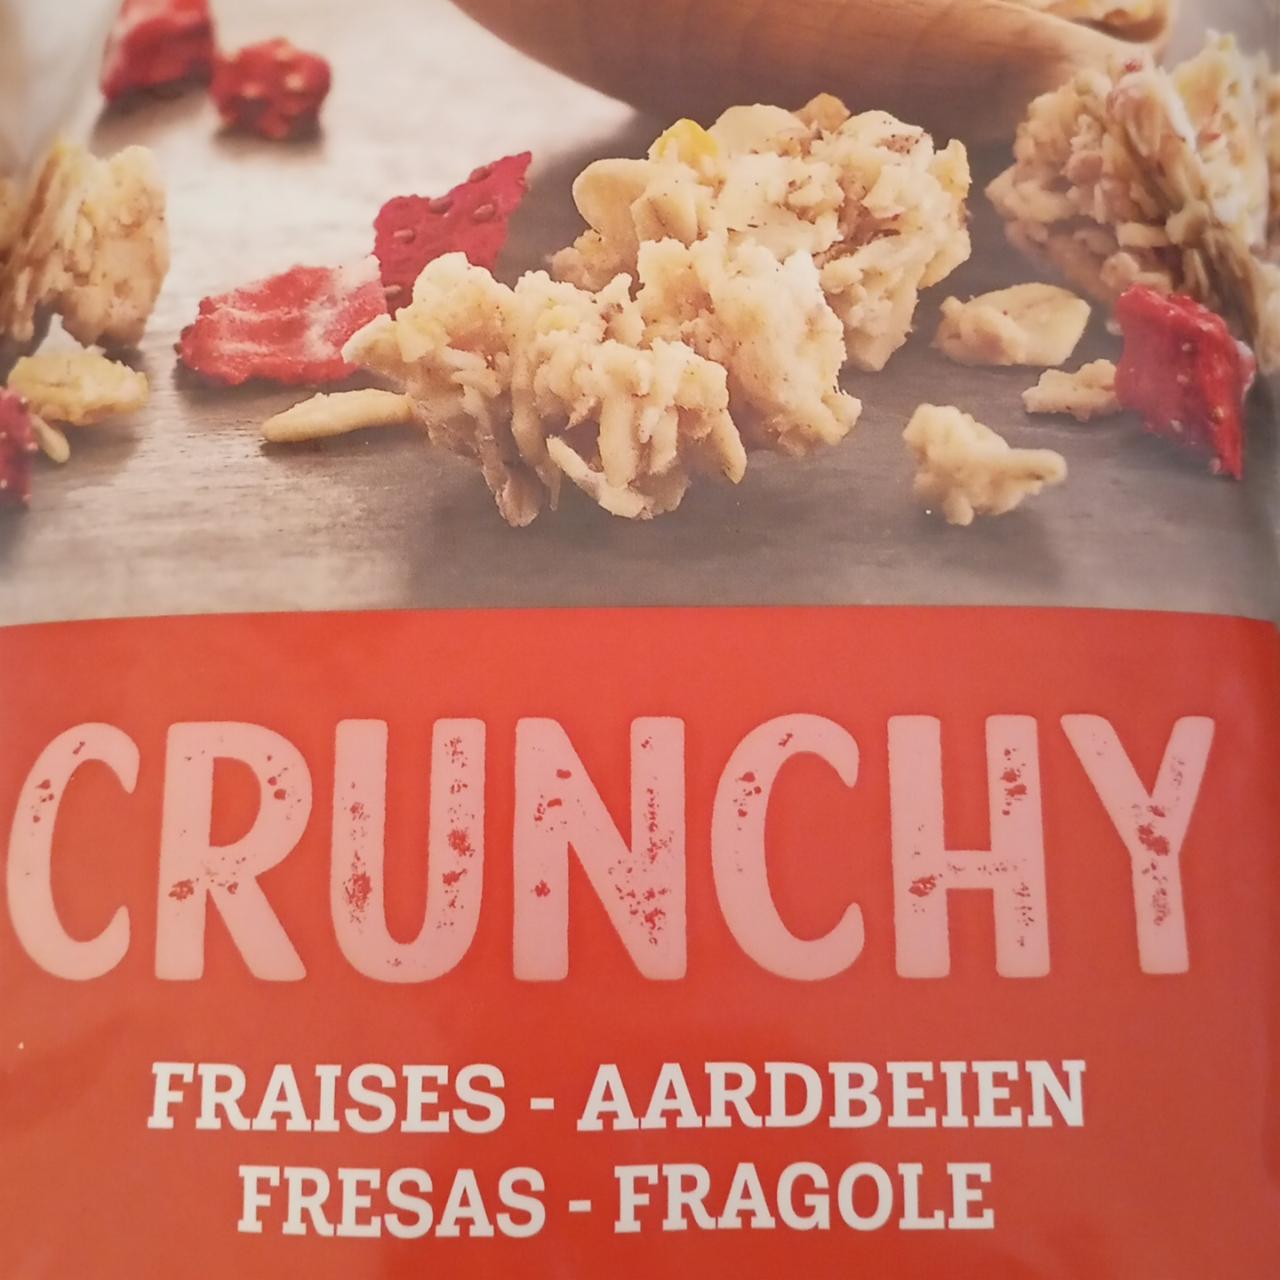 Fotografie - Crunchy fraises - aardbeien fresas - fragole Carrefour Sensation